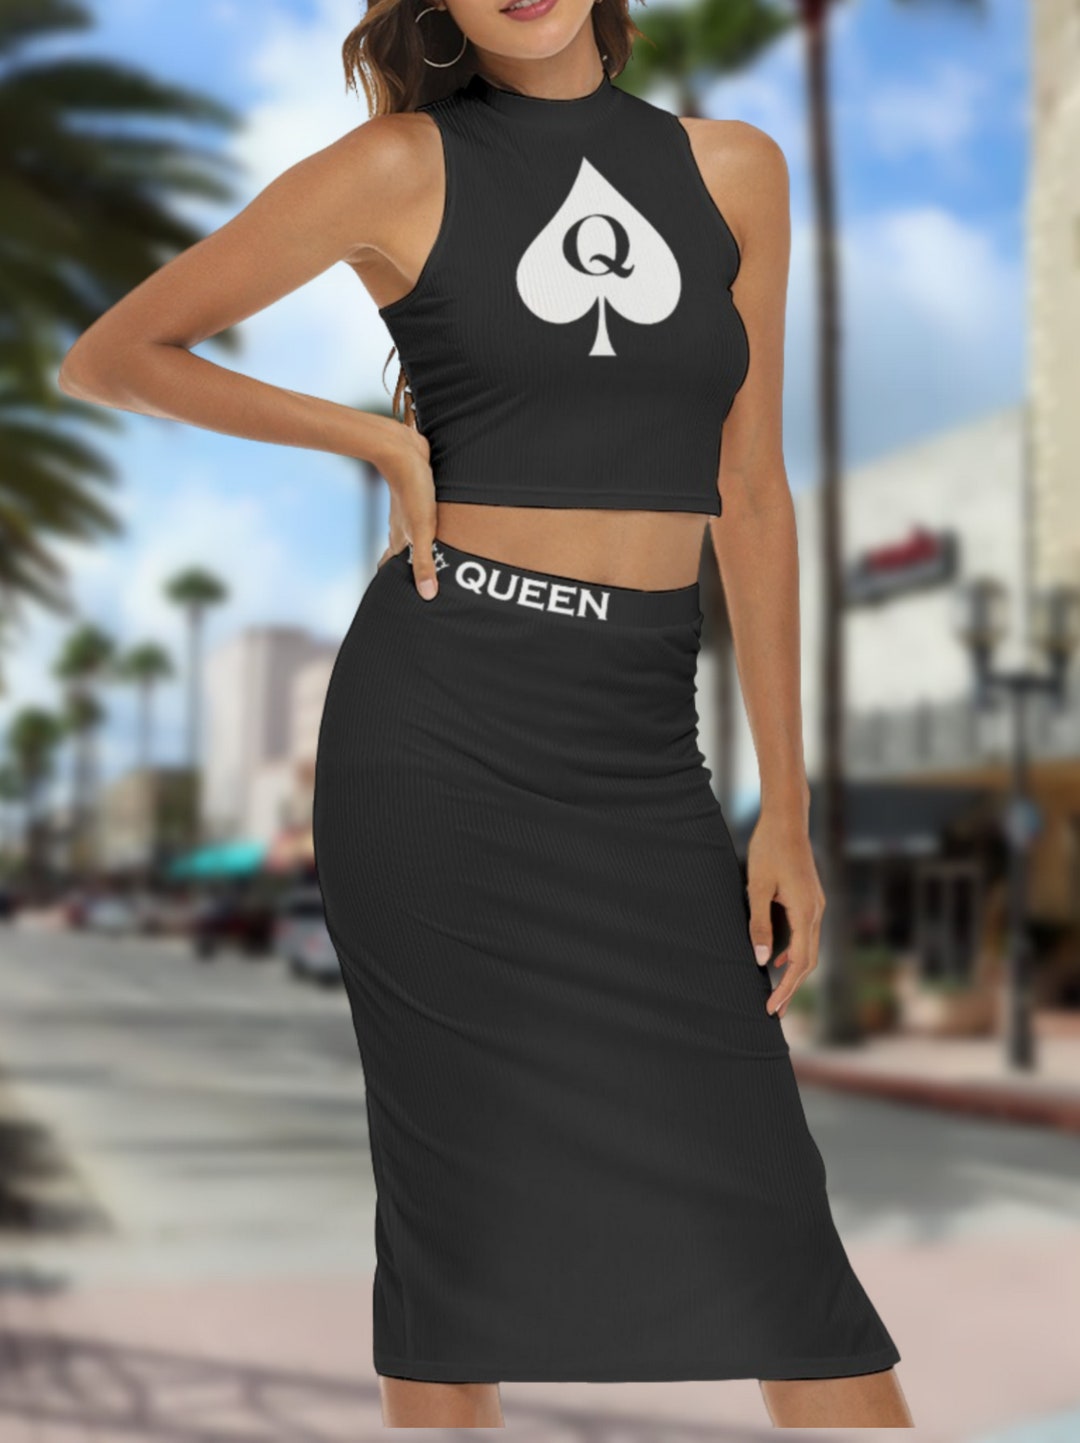 Queen Of Spades Dress 2 Pieces Set Slut Clothing Cuckolding Qos Dres Queen Of Spadess